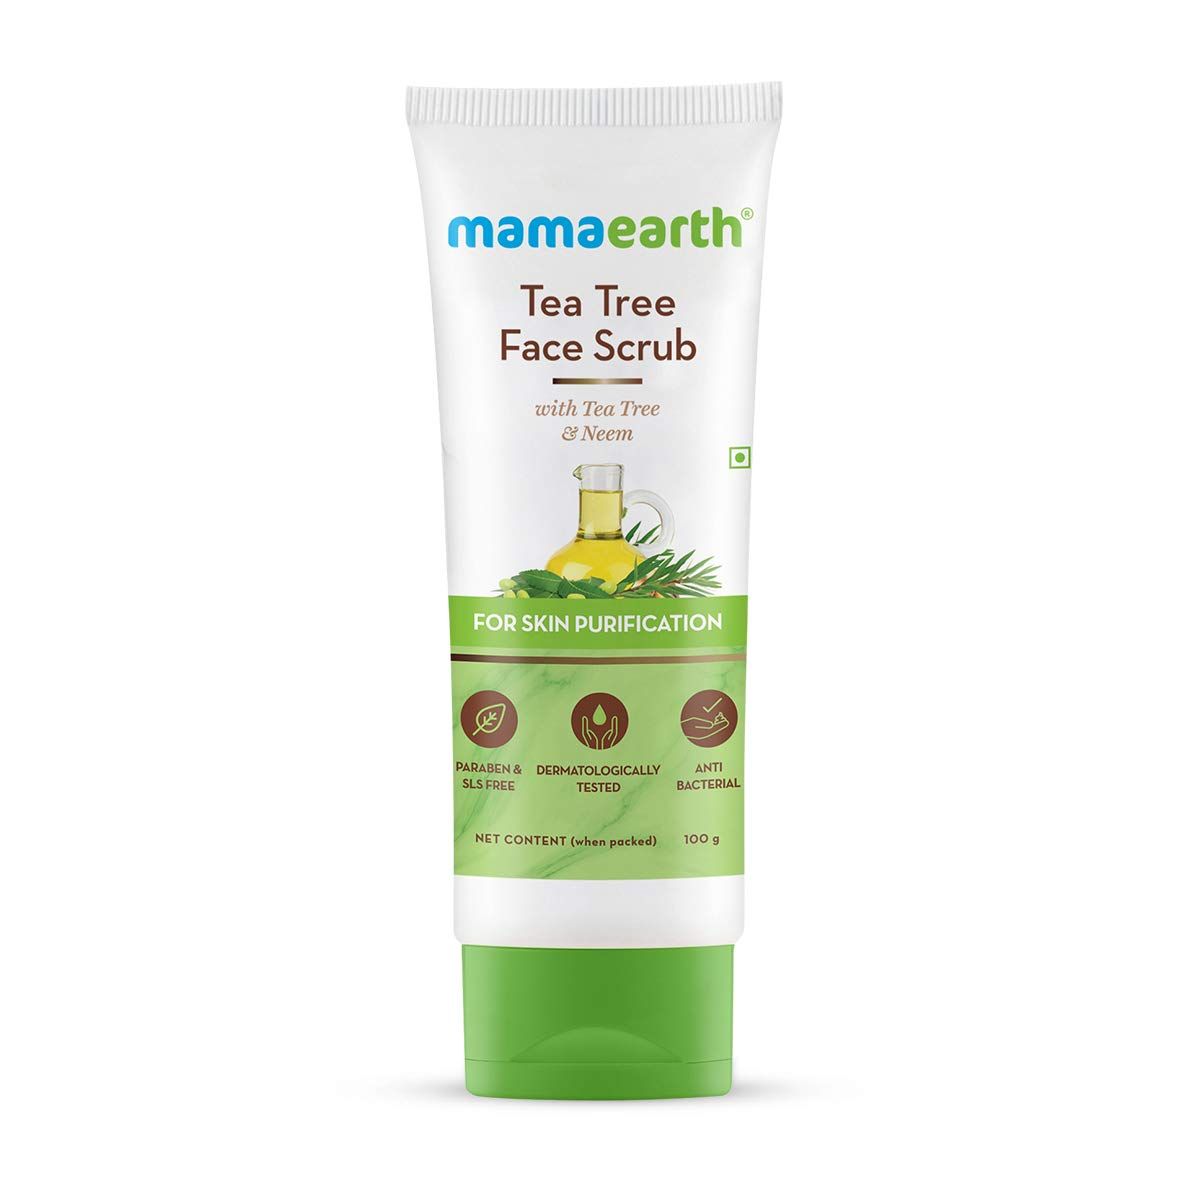 Mamaearth Tea Tree Face Scrub with Tea Tree and Neem for Skin Purification - 100g